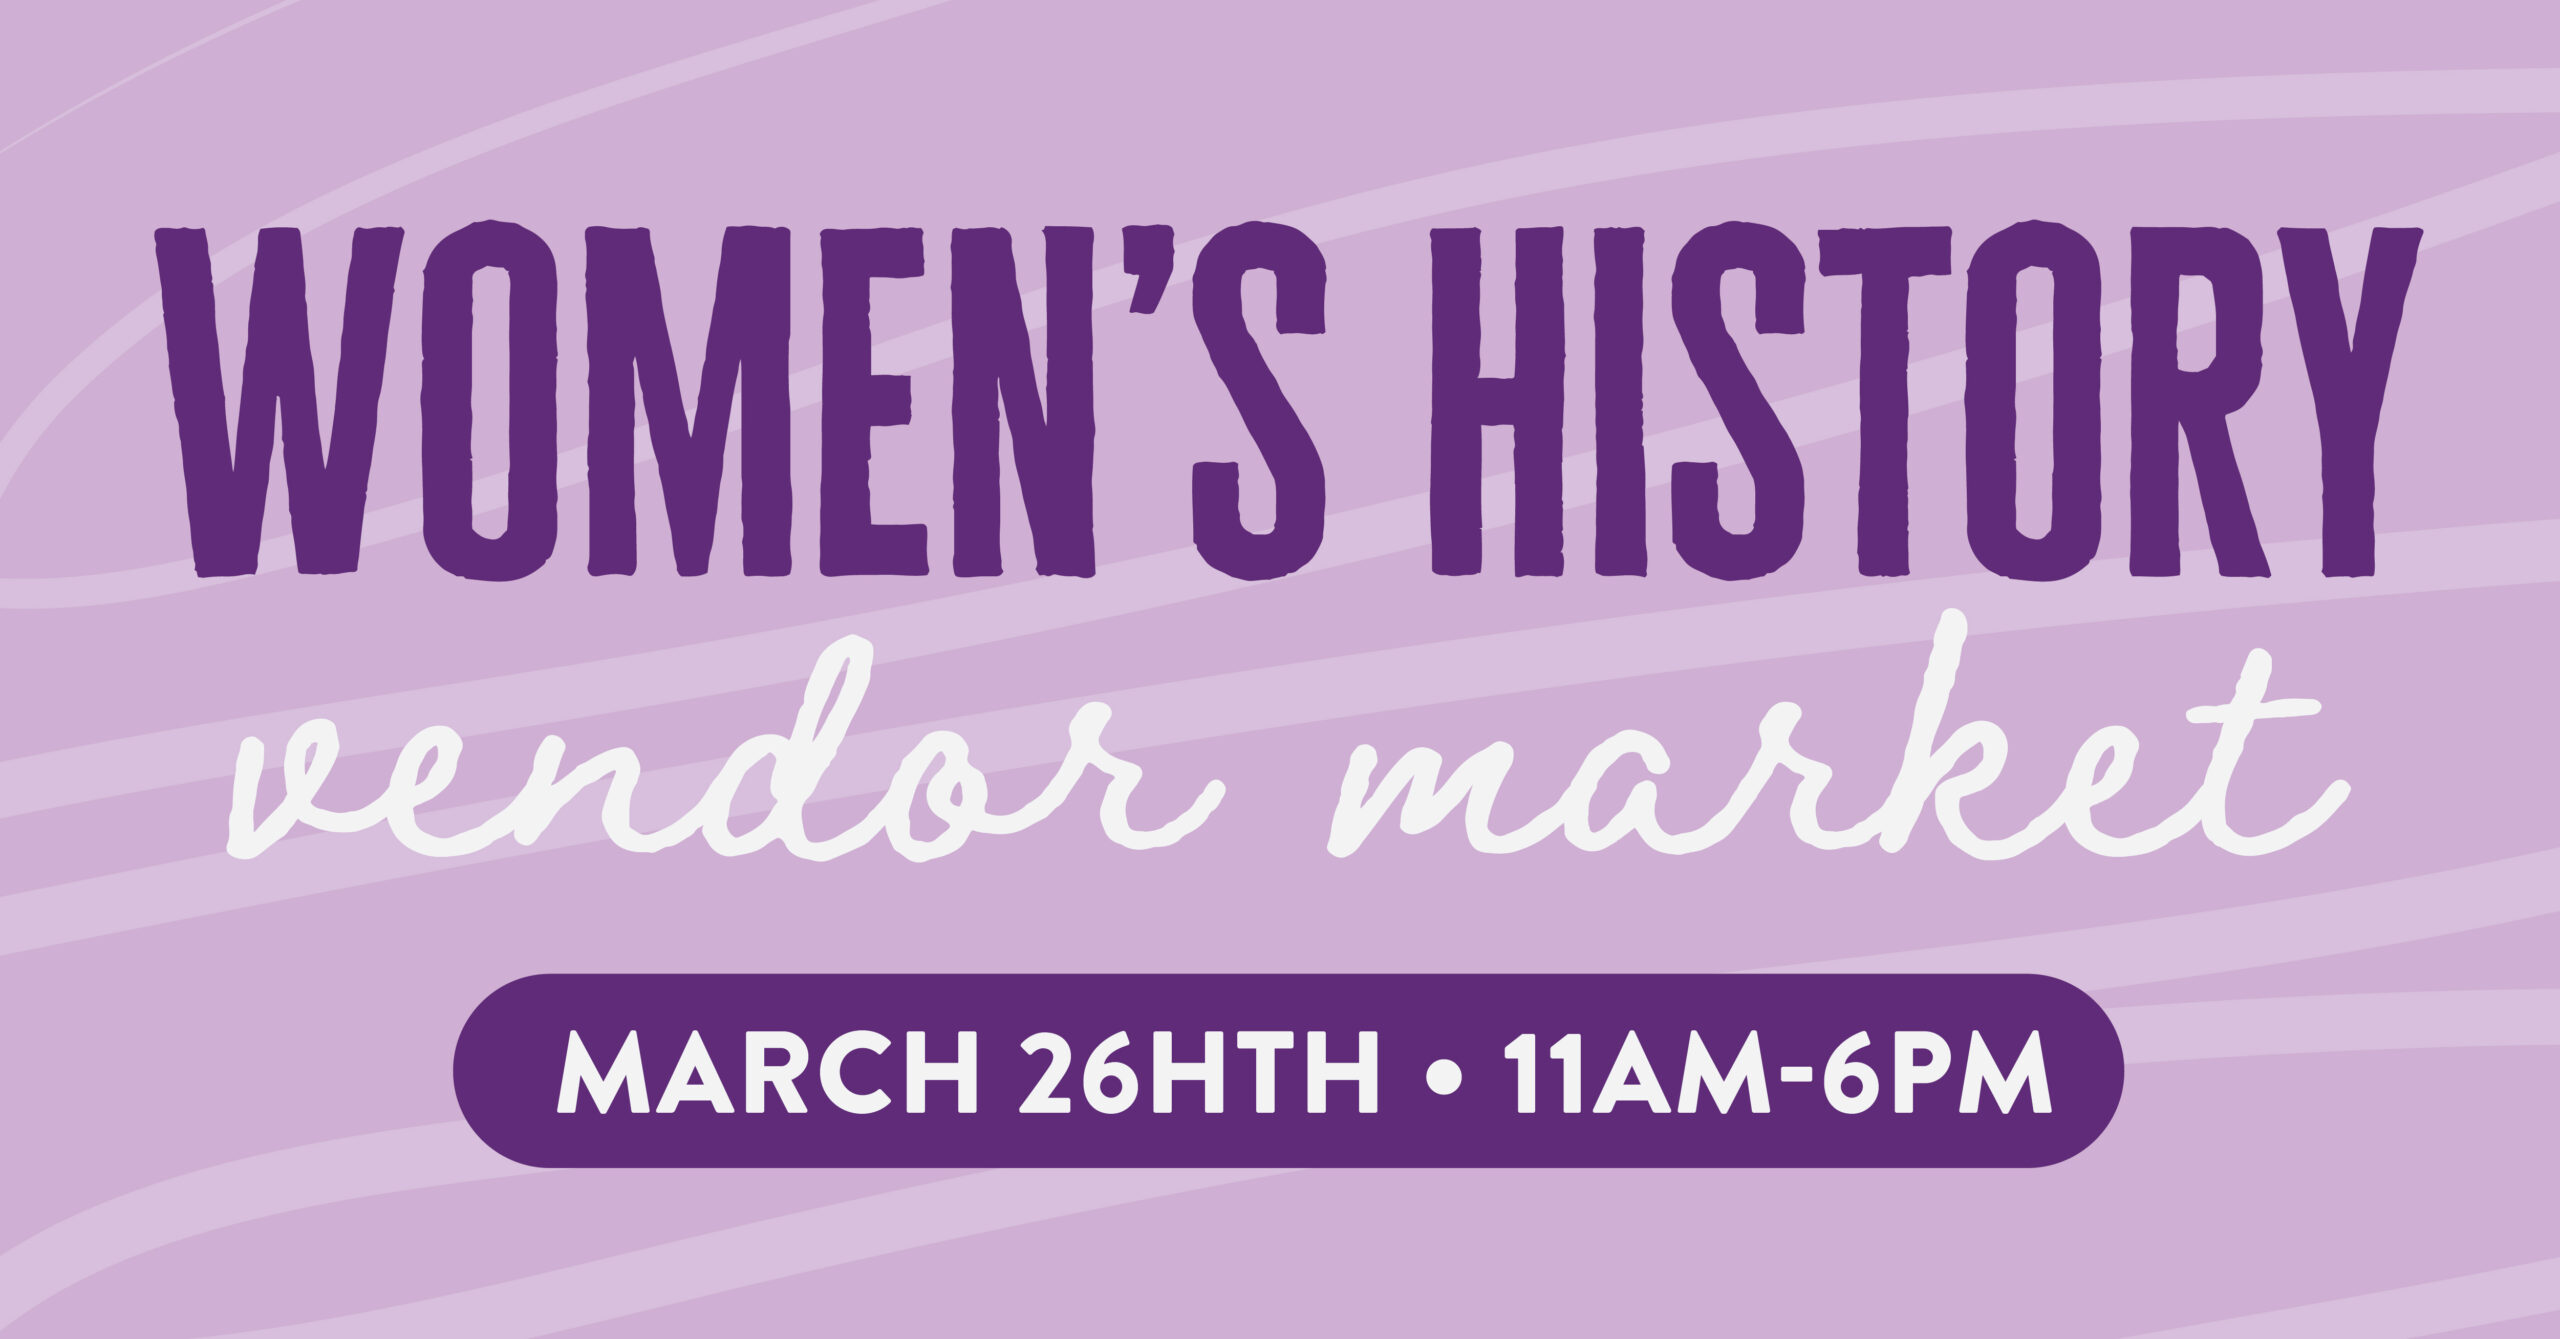 Womens-History-Vendor-Market-02-scaled.jpg